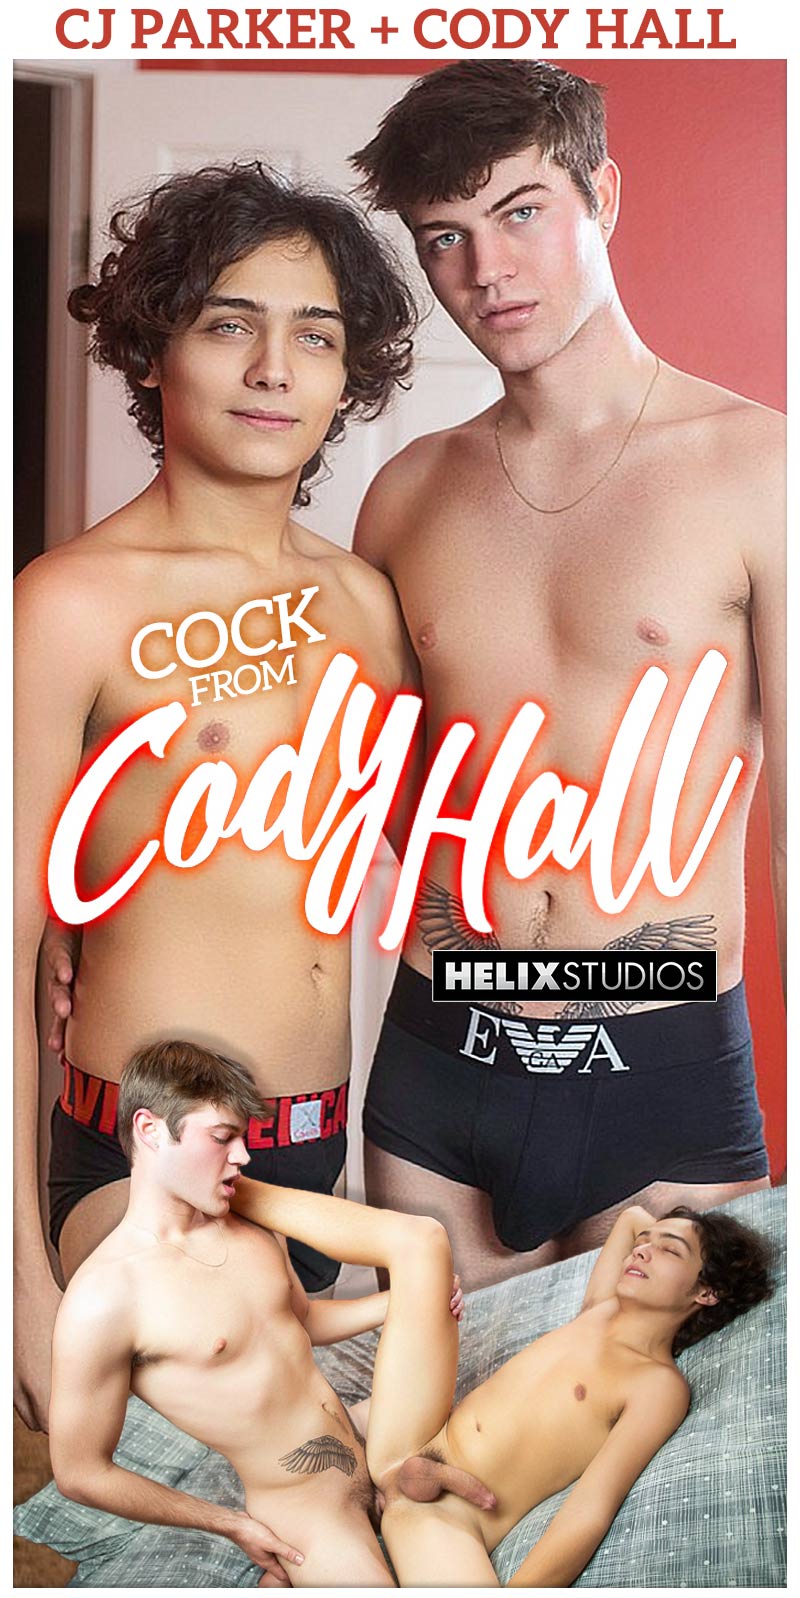 Cock From Cody Hall (Cody Hall Fucks CJ Parker) at Helix Studios